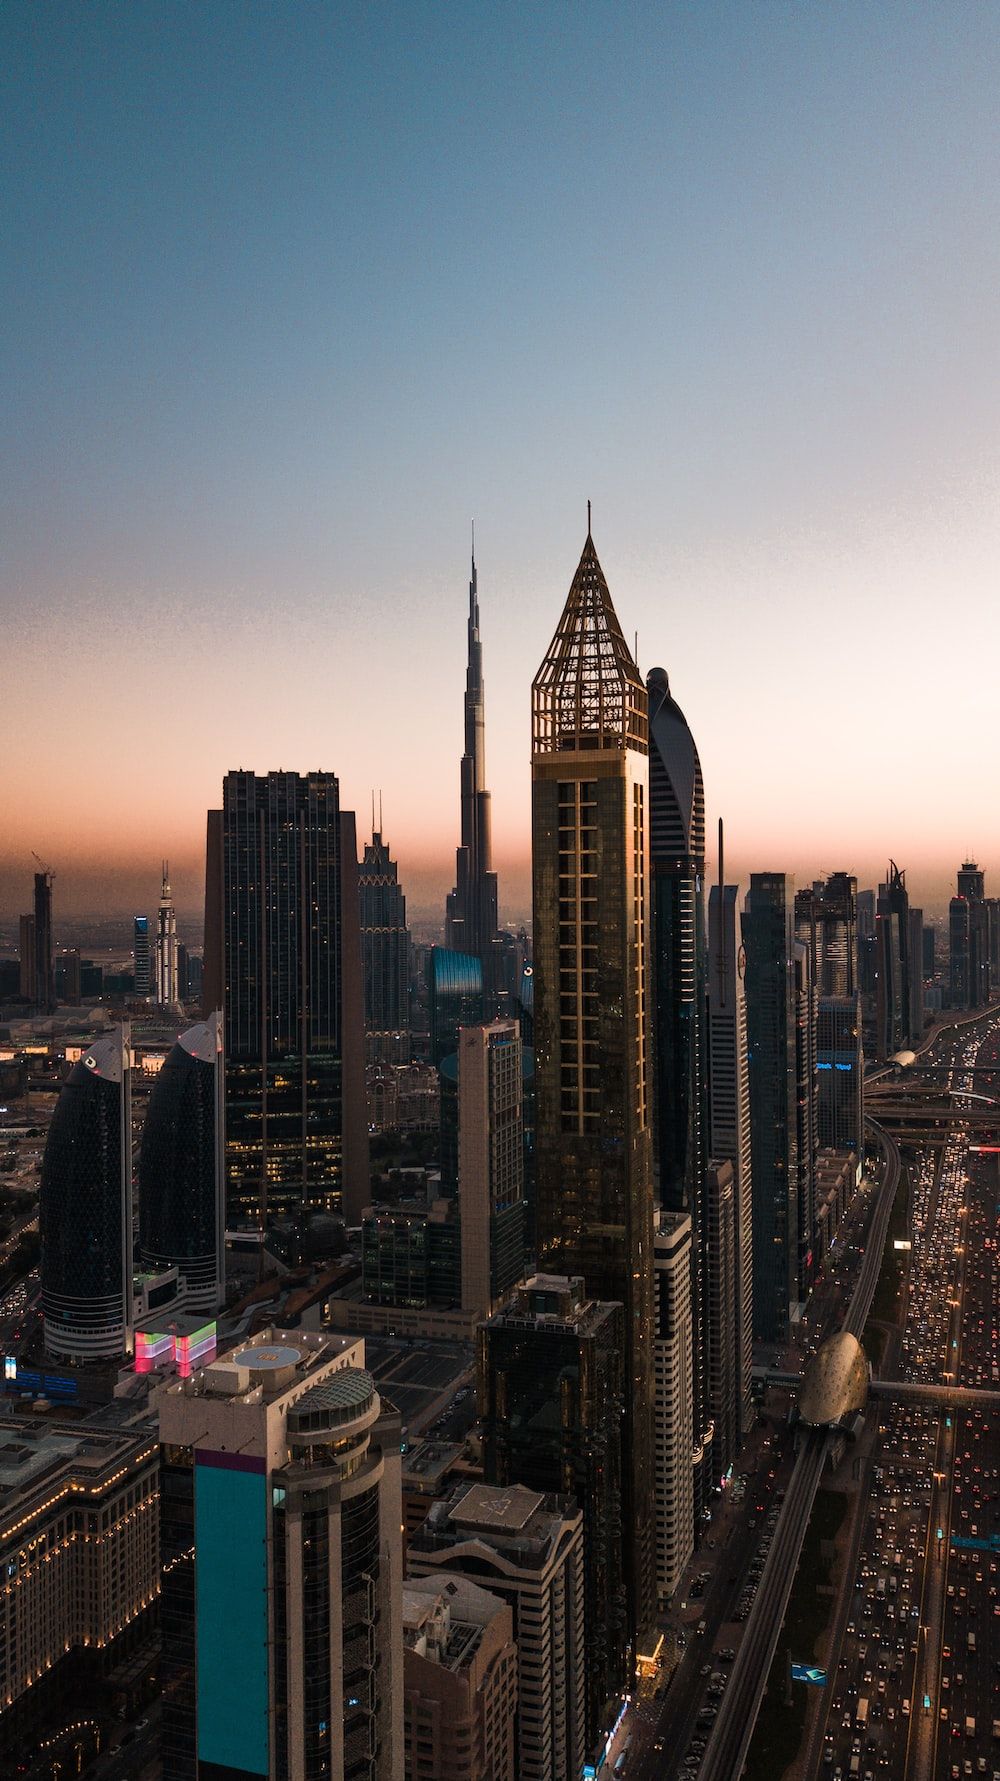  Dubai Hintergrundbild 1000x1781. Best Dubai Picture [HD]. Download Free Image